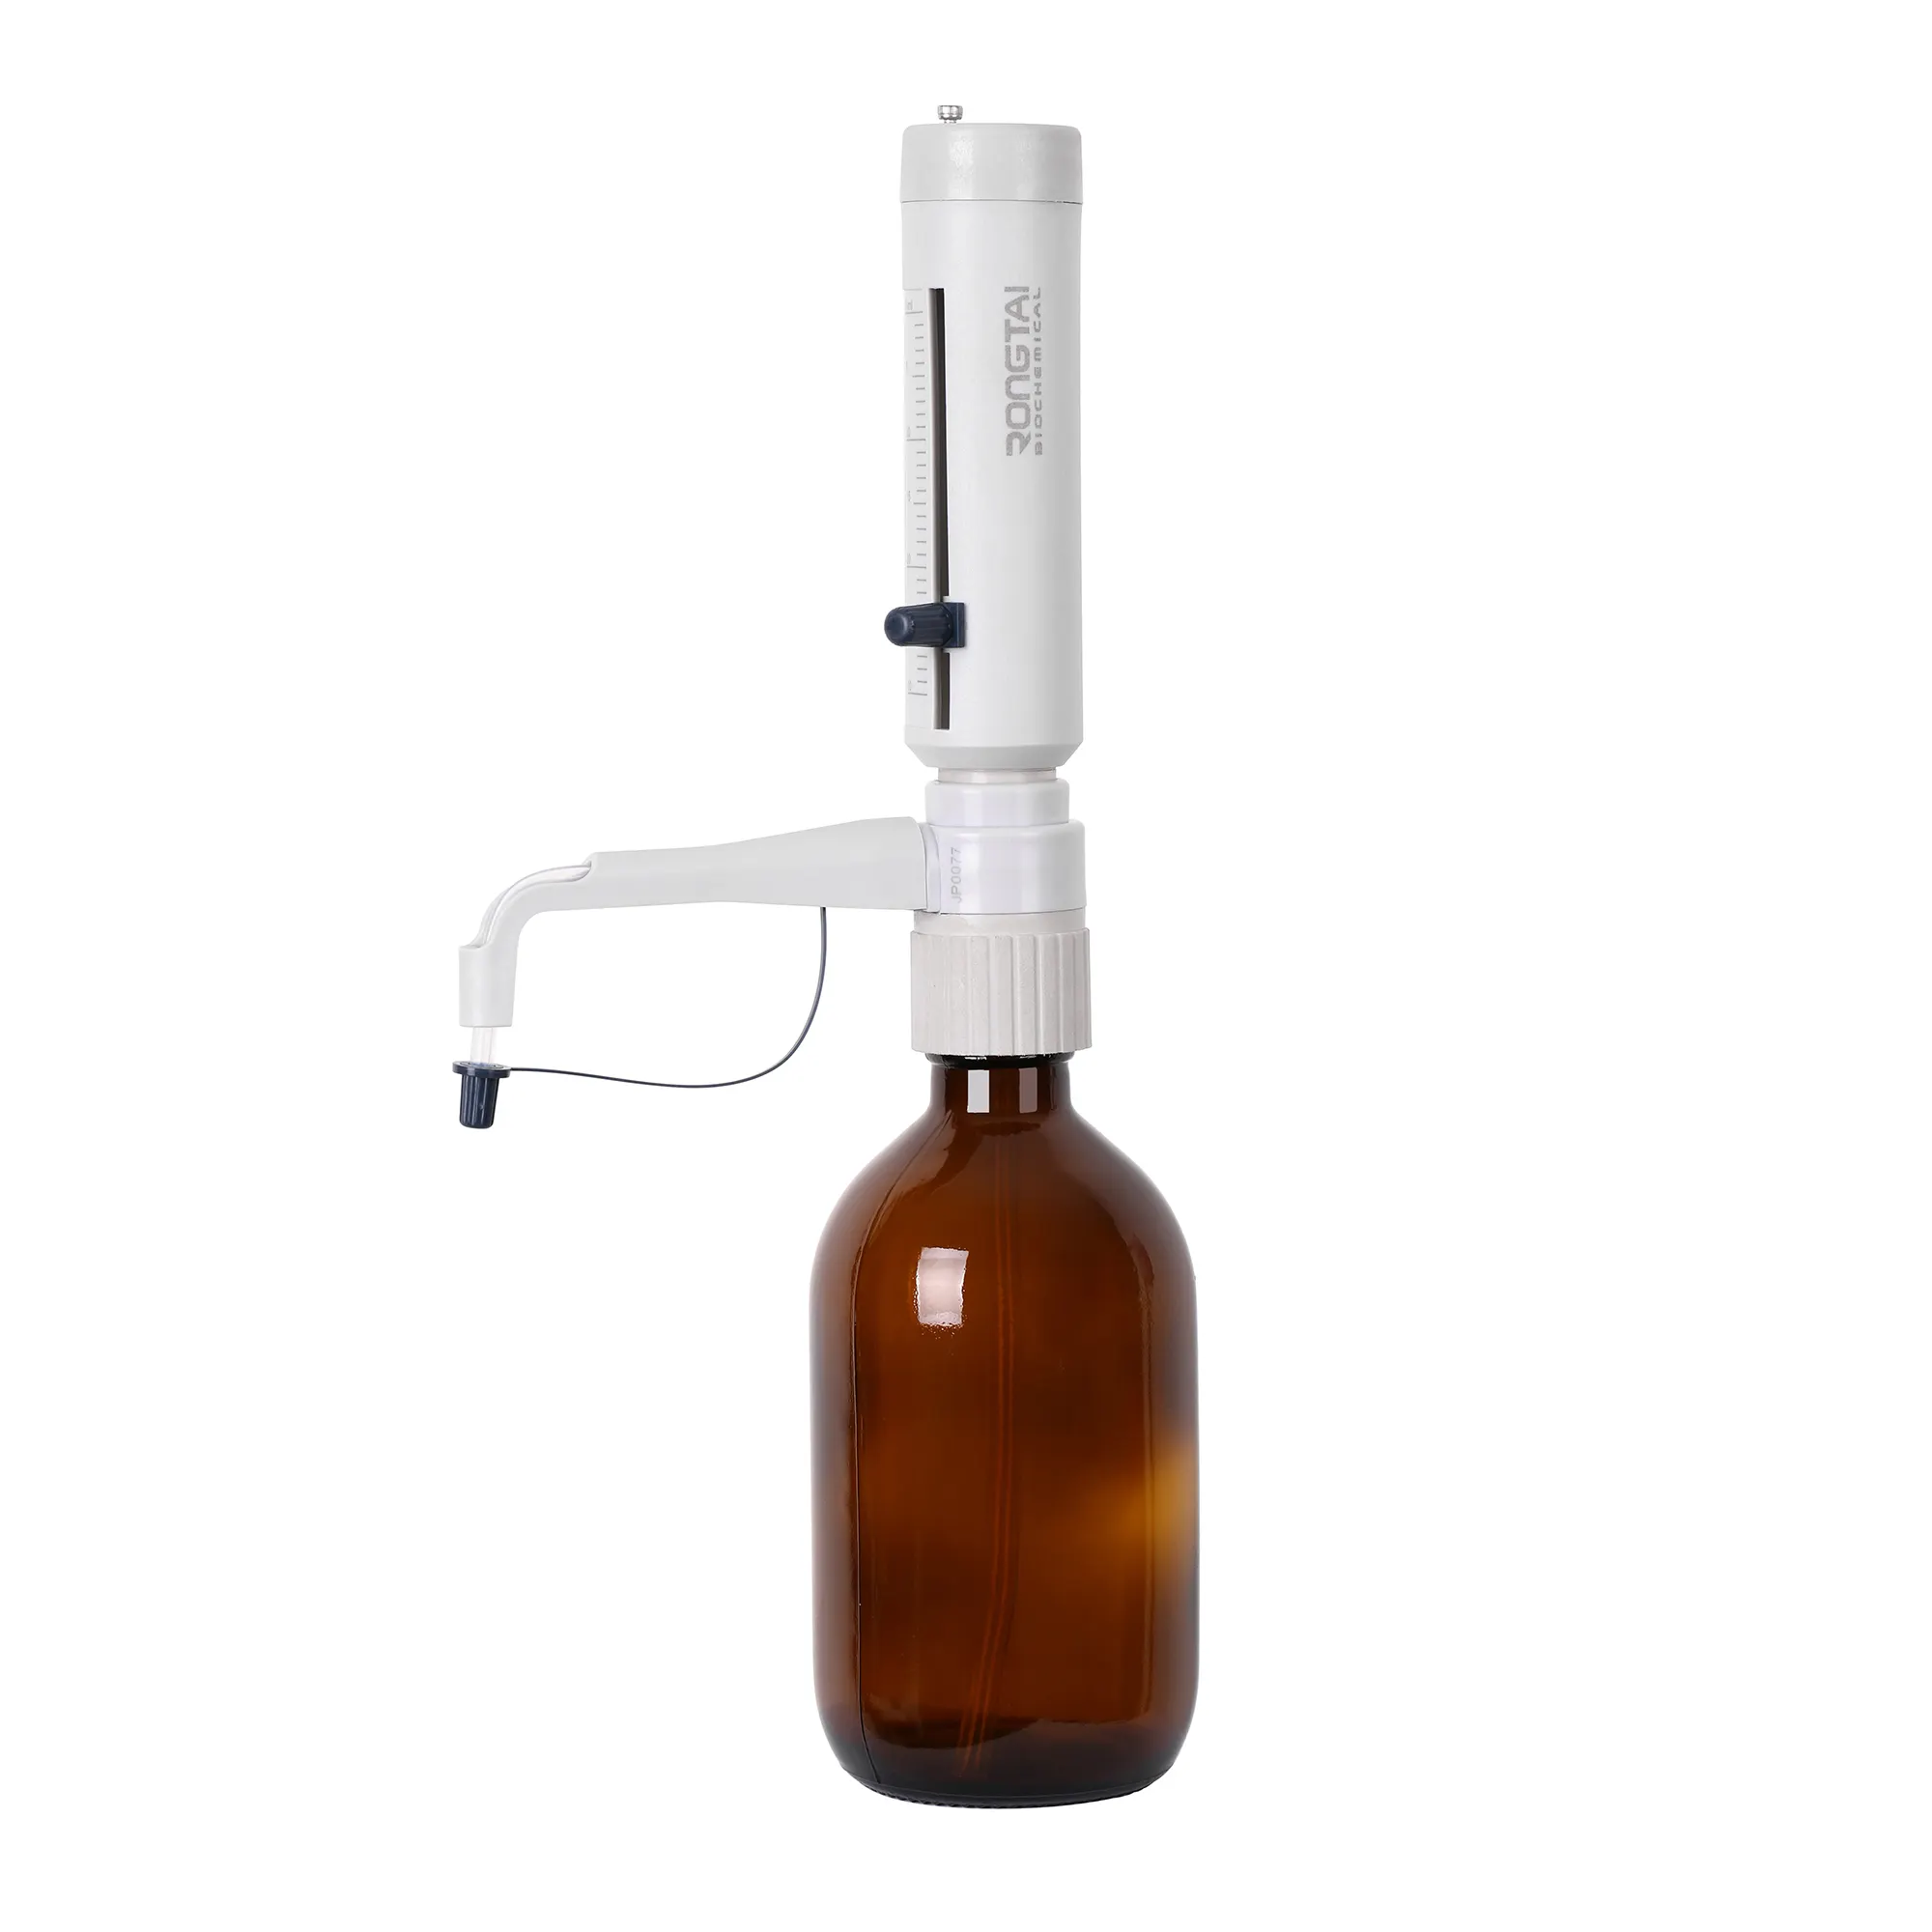 lab bottle top dispenser scientific lab general acid and alkali good quality 5-30ml